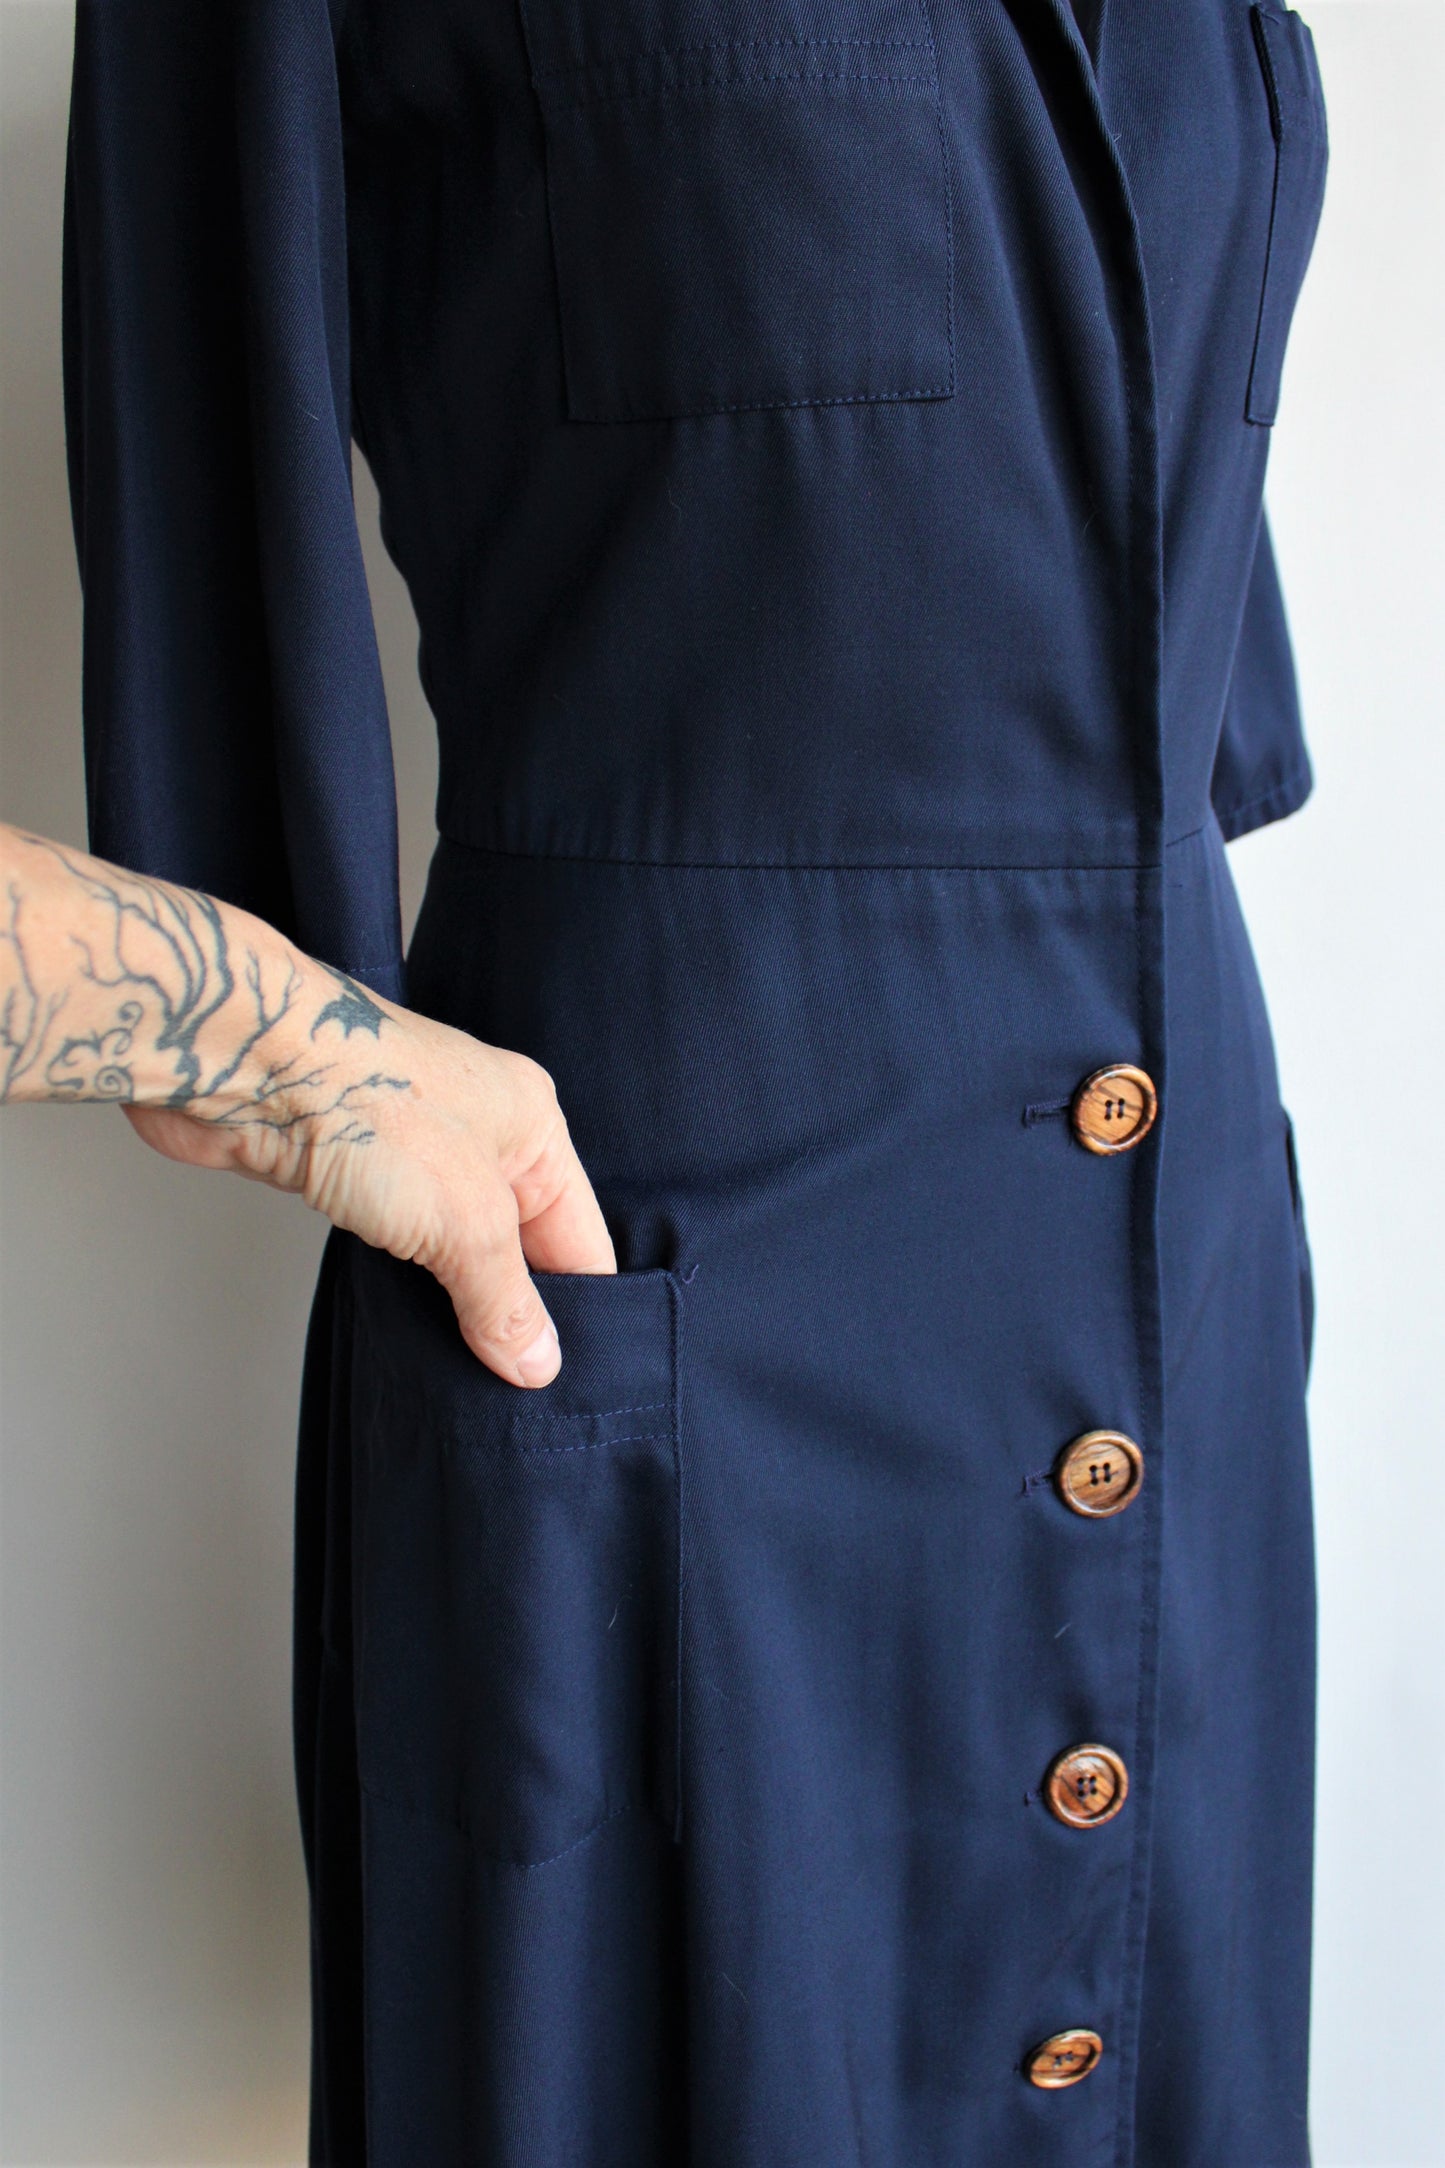 Vintage 1980s Does 1940s Navy Blue Dress